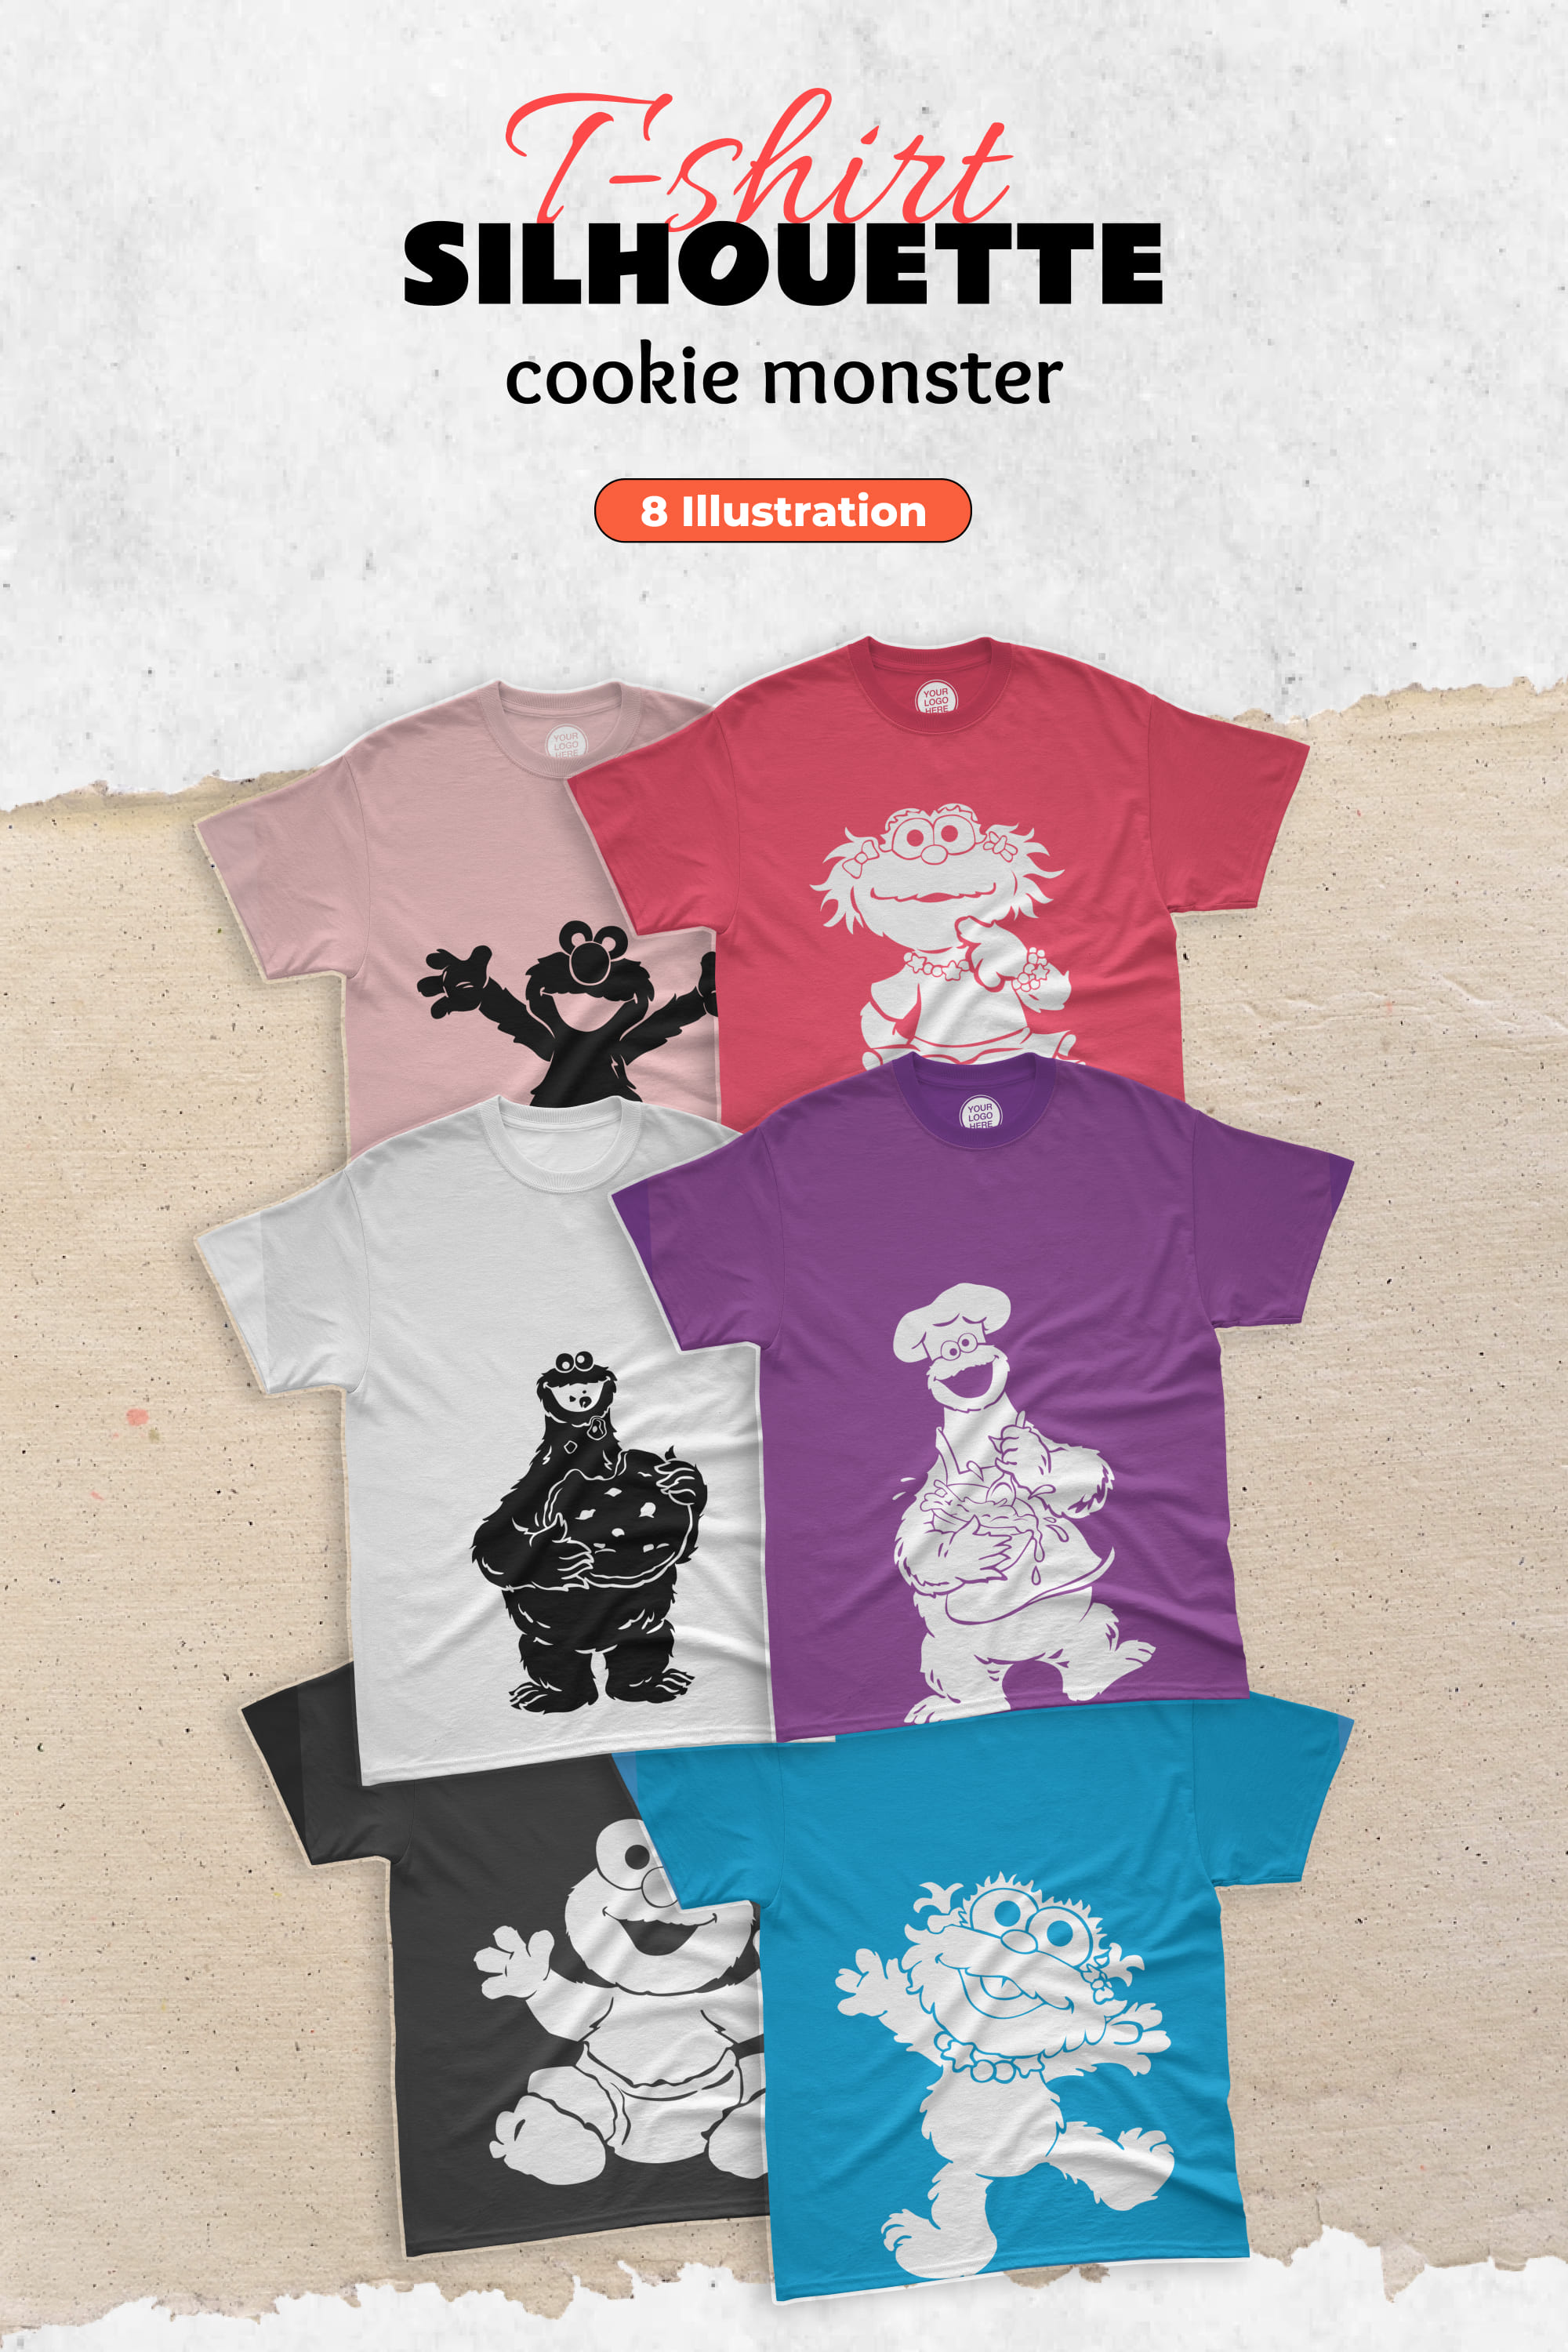 Silhouette Cookie Monster T-shirt Designs Bundle - Pinterest.